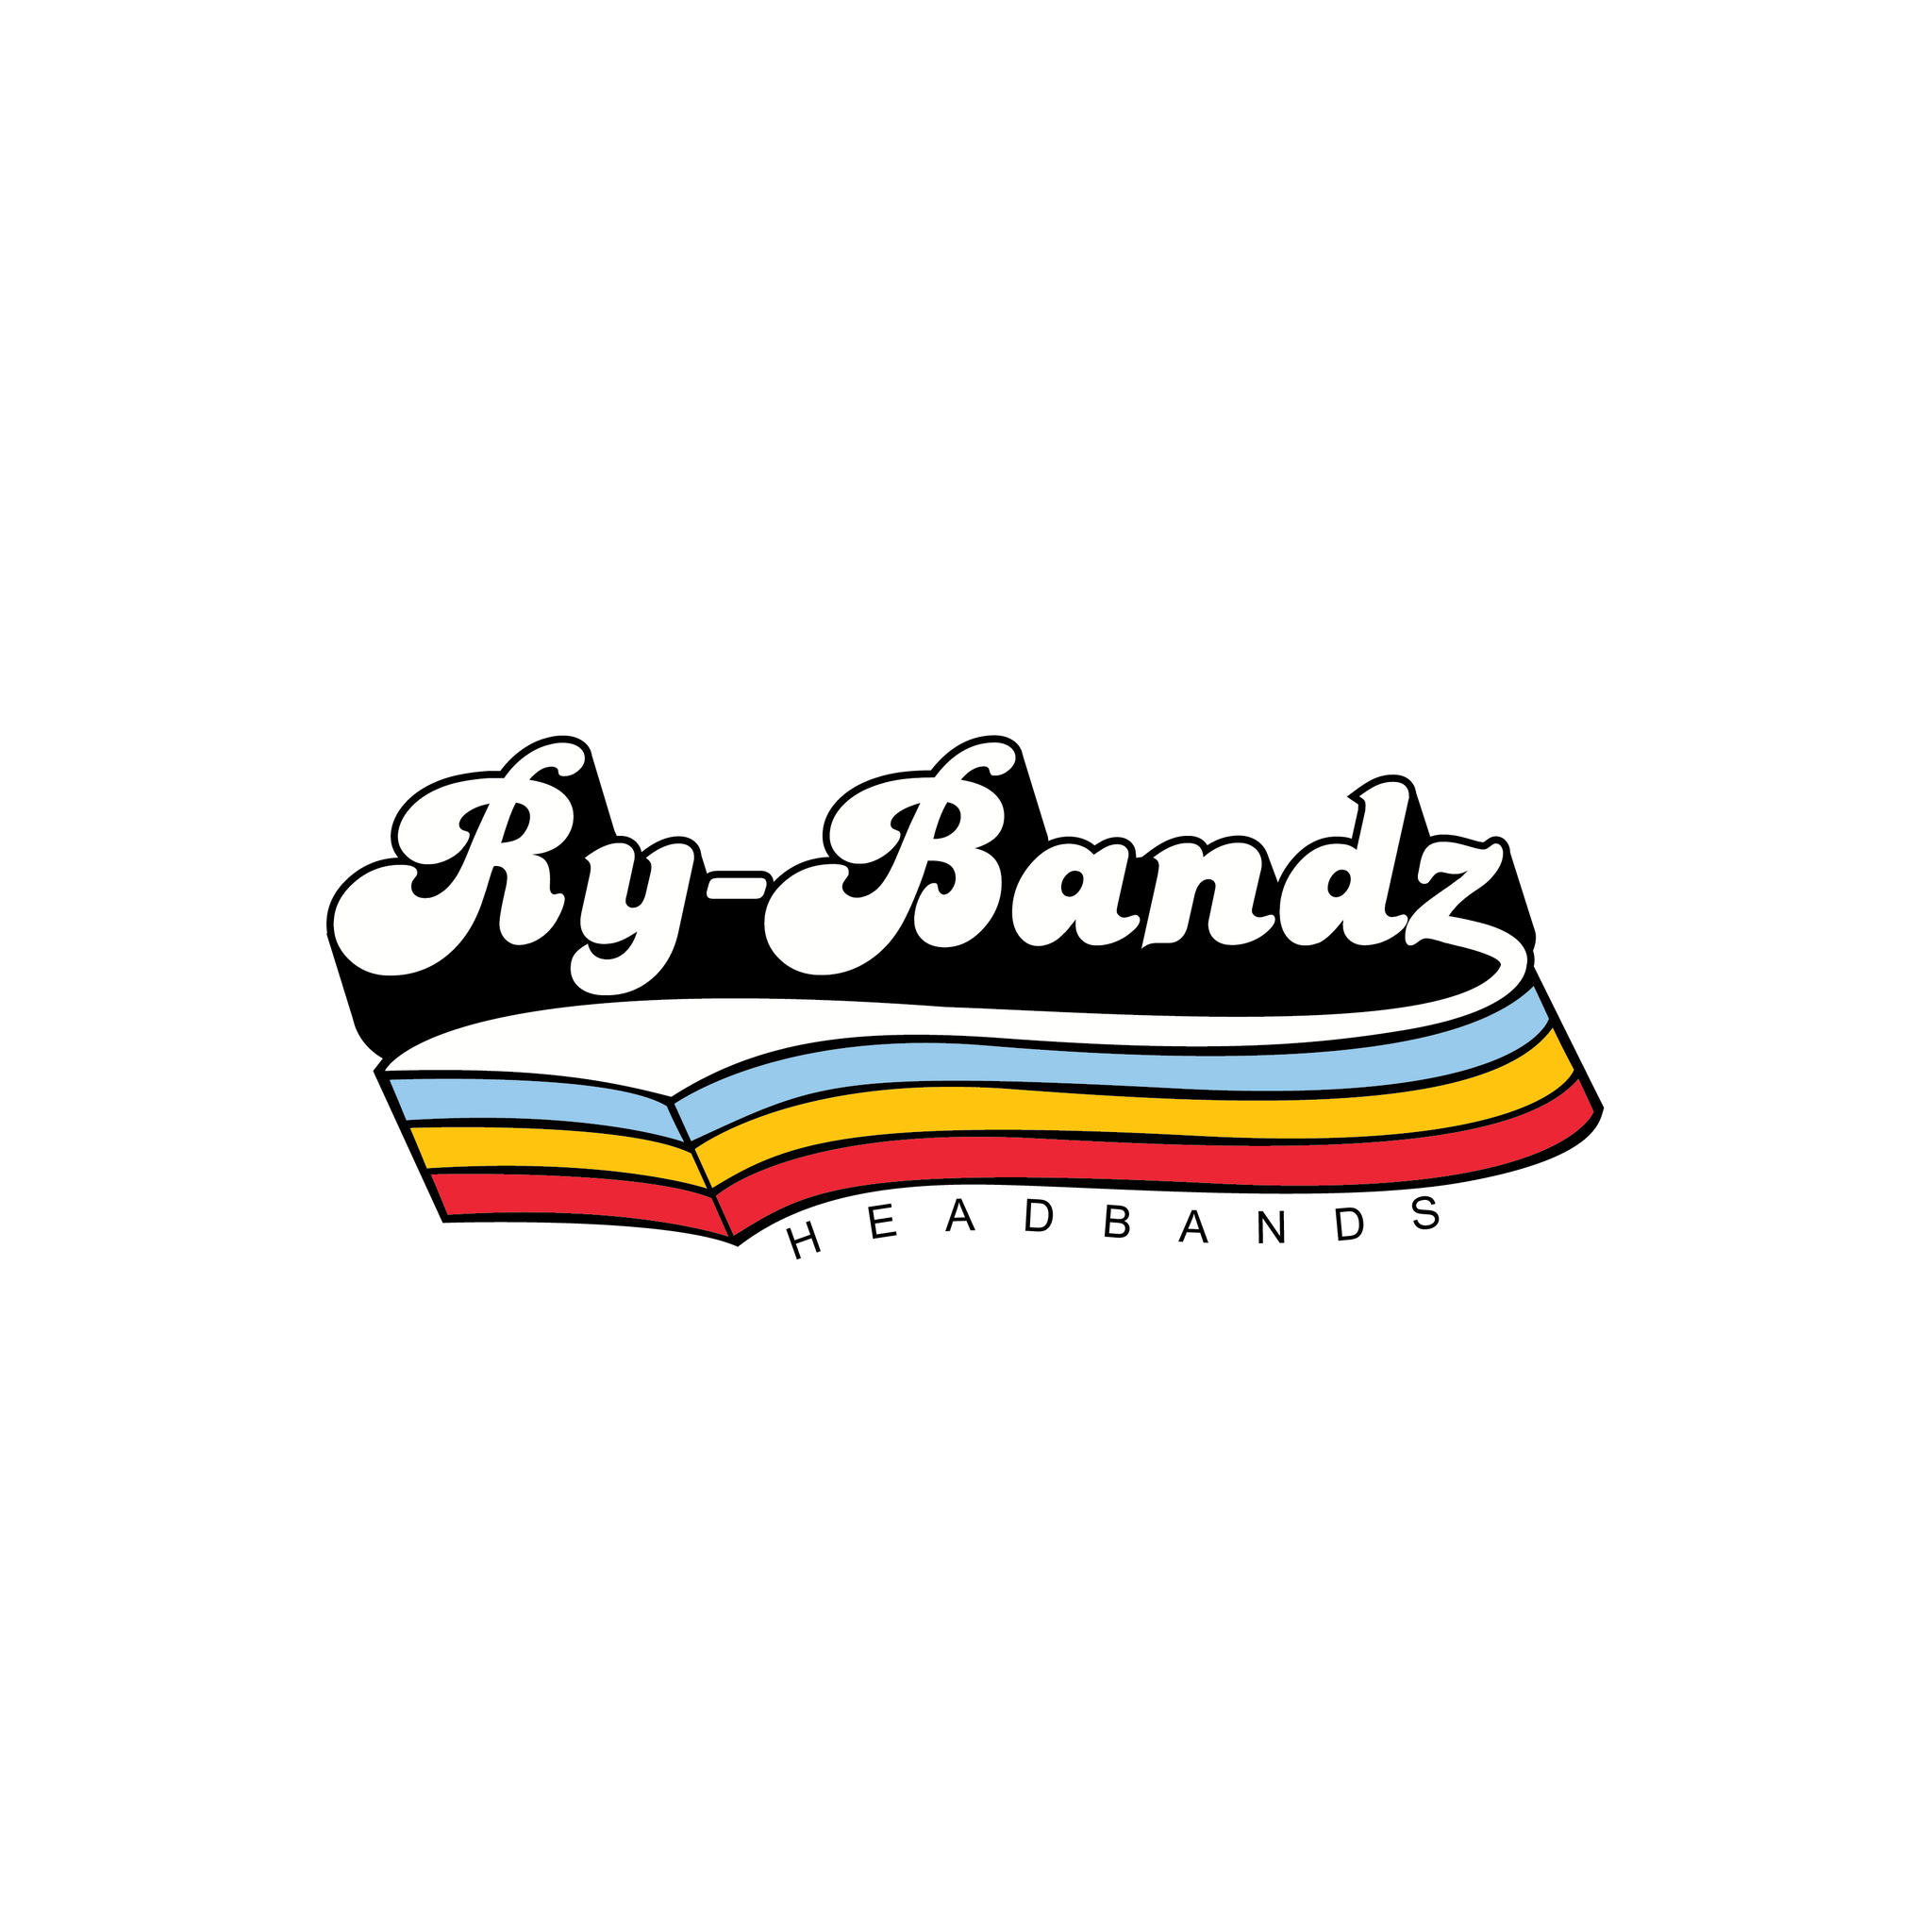 RY-BANDZ GIFT CARD